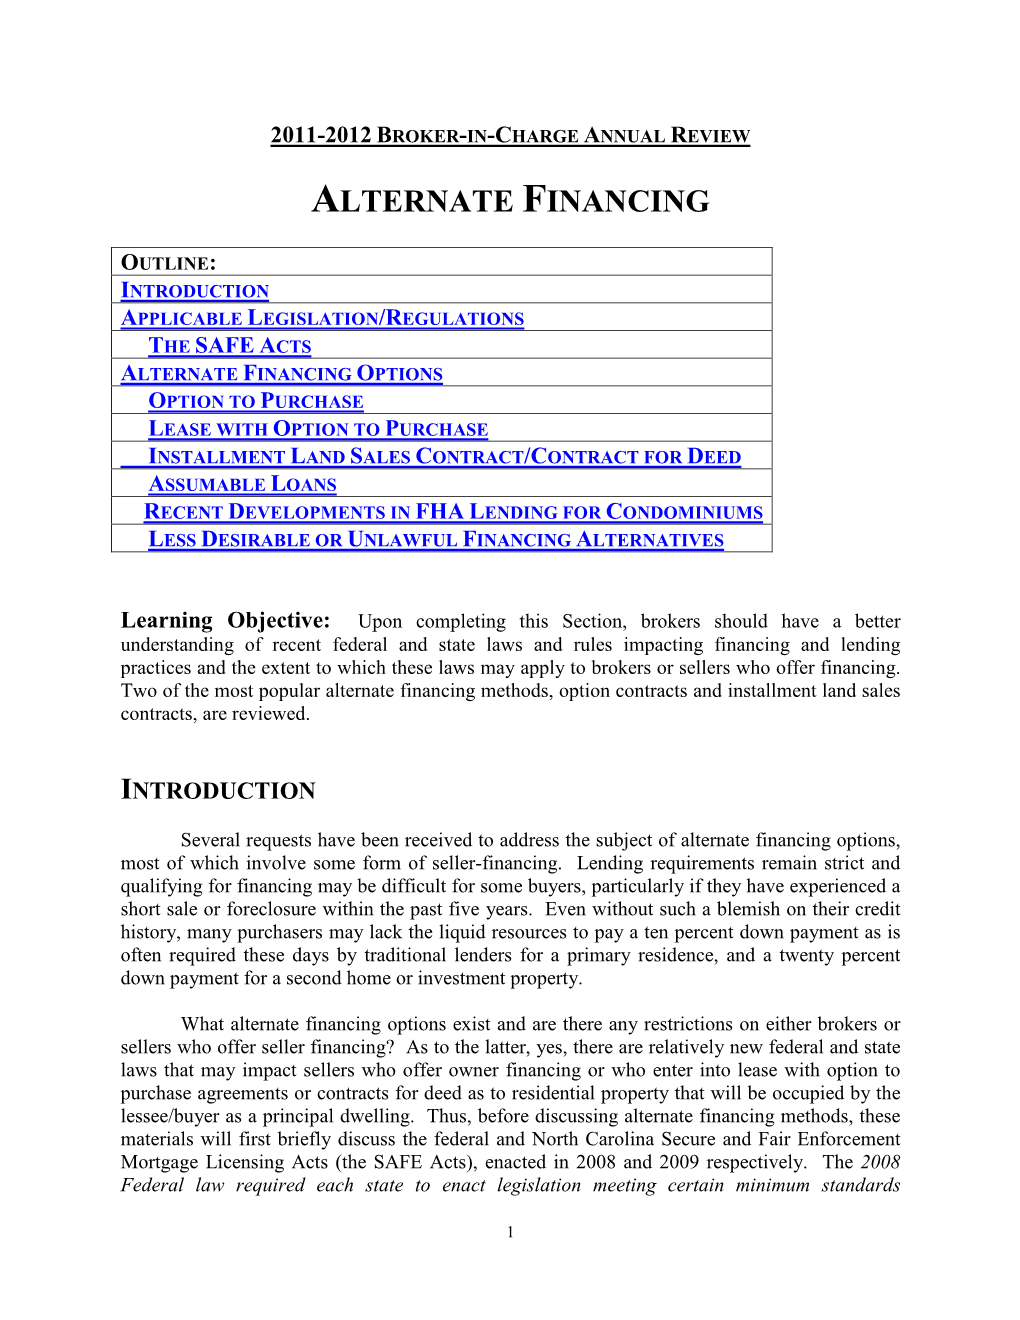 Alternate Financing